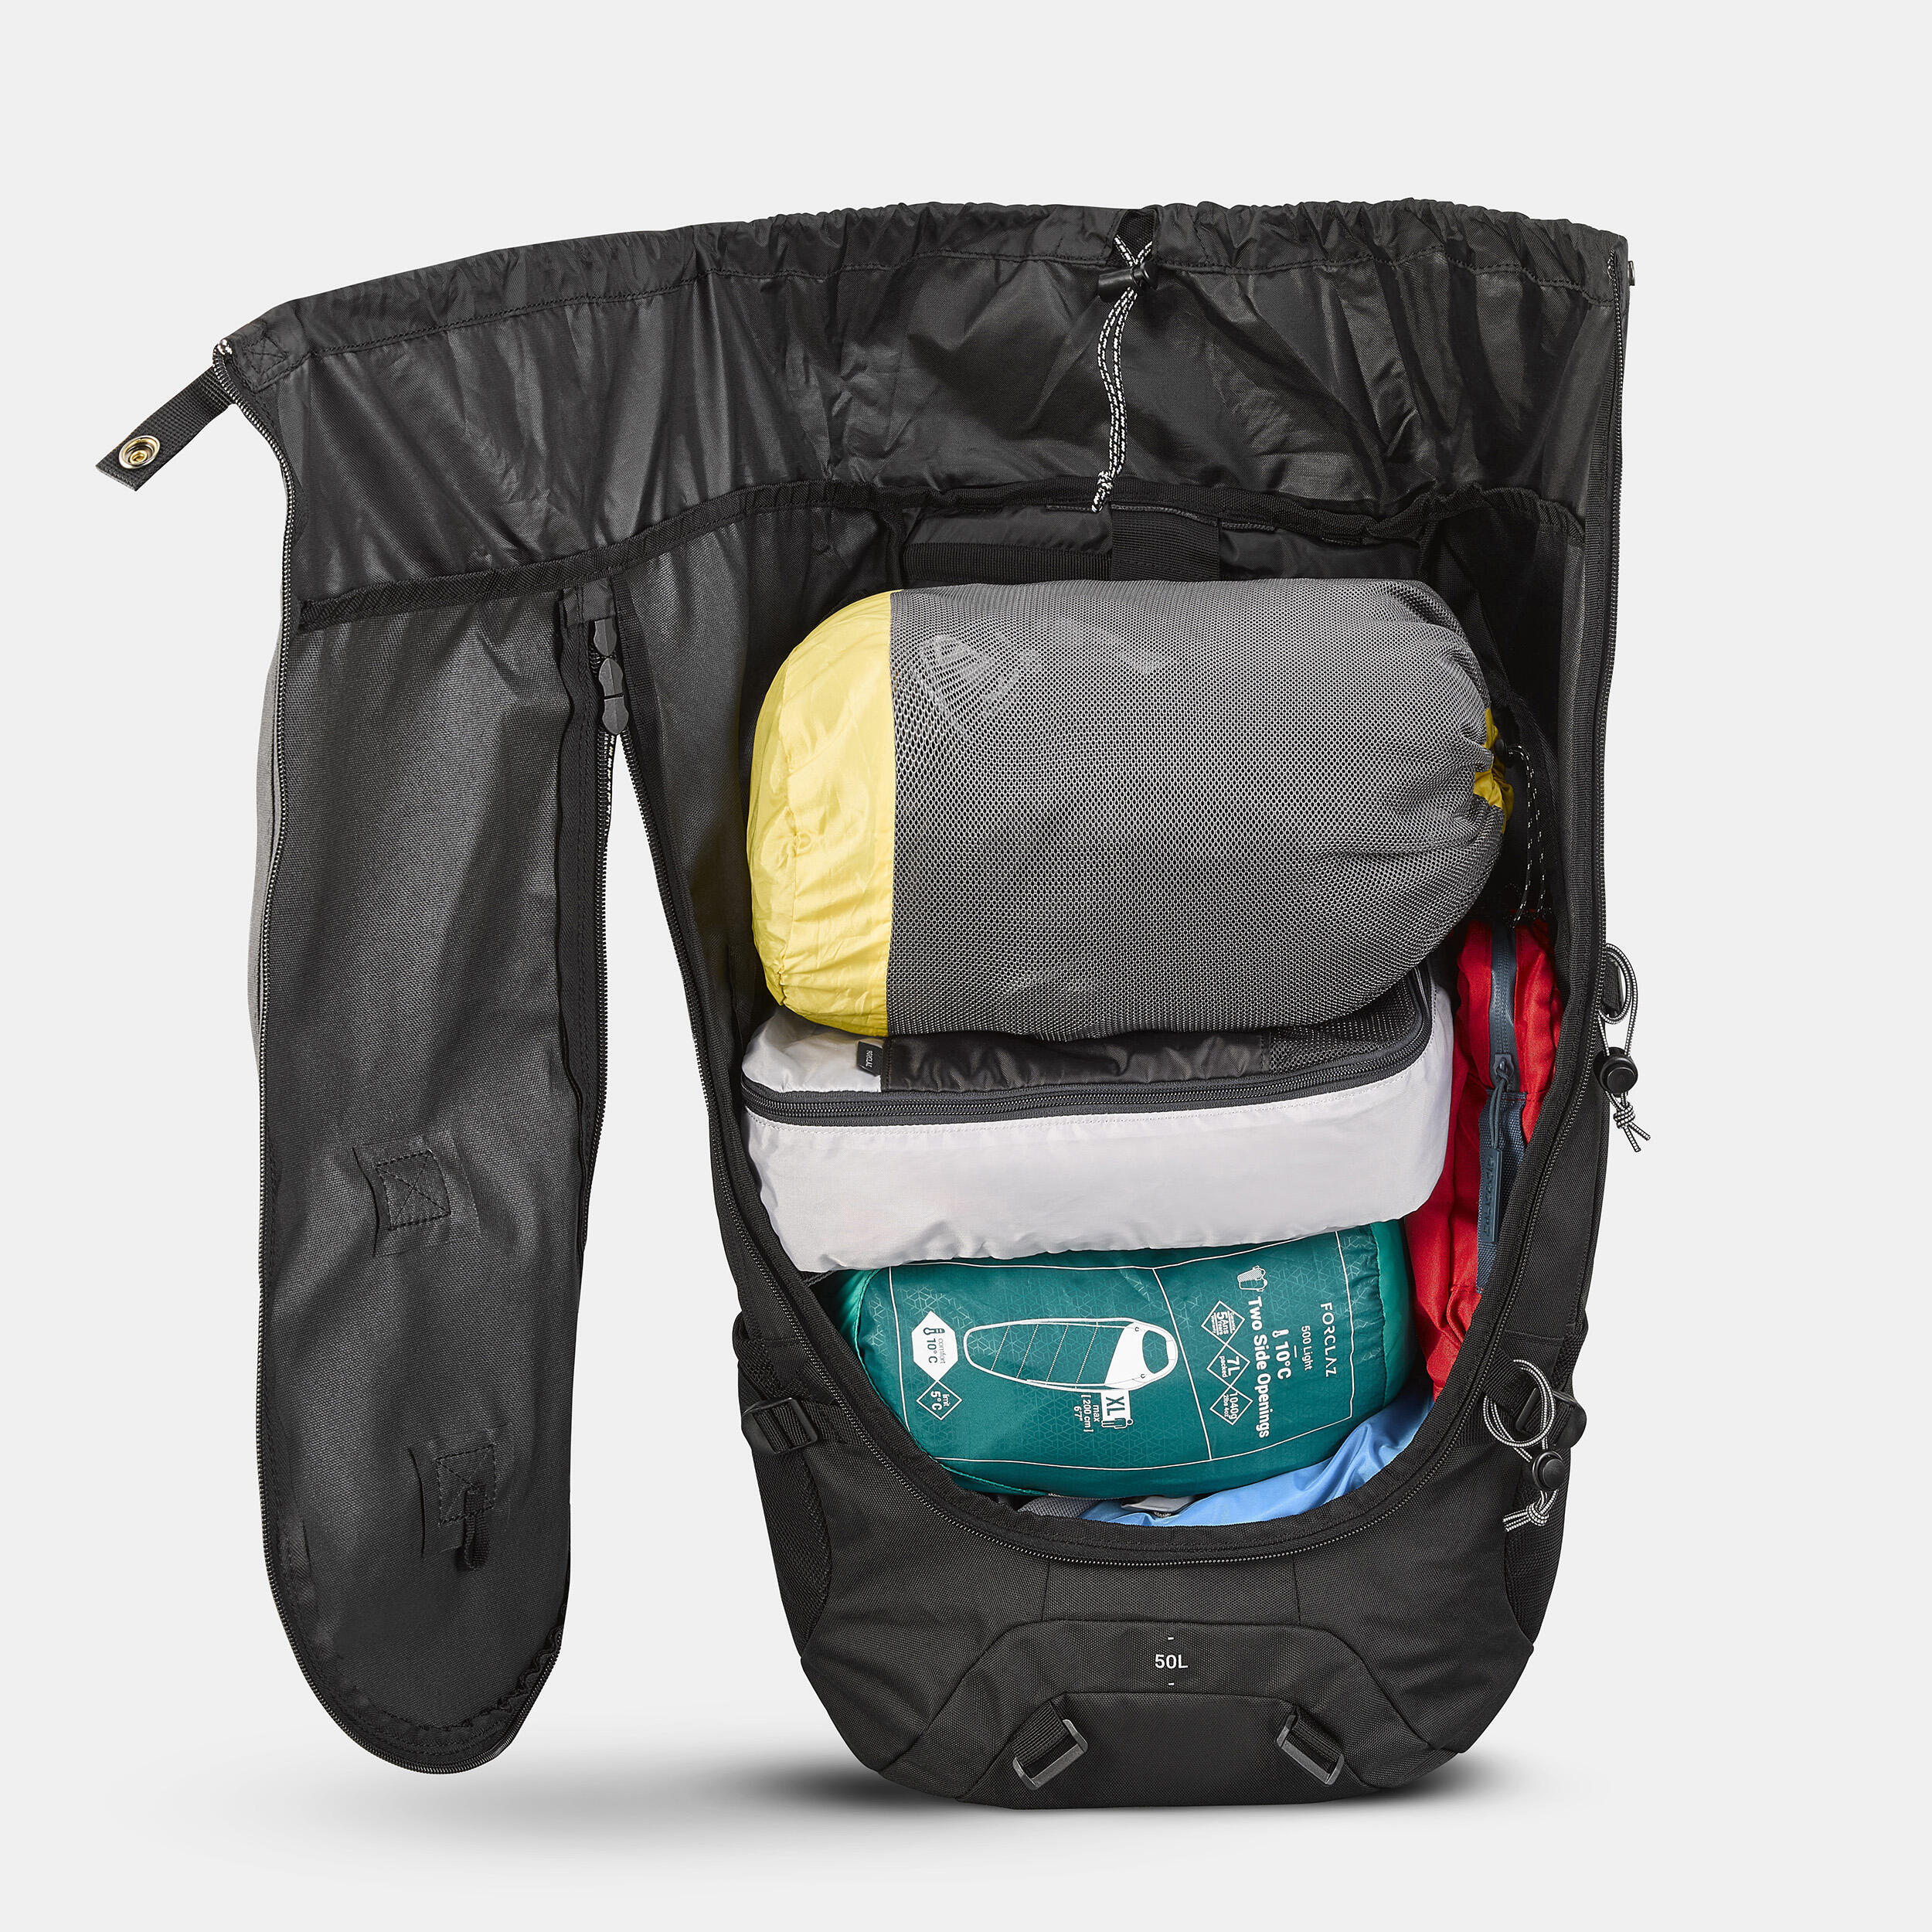 Travel backpack 50L - Travel 100 9/19